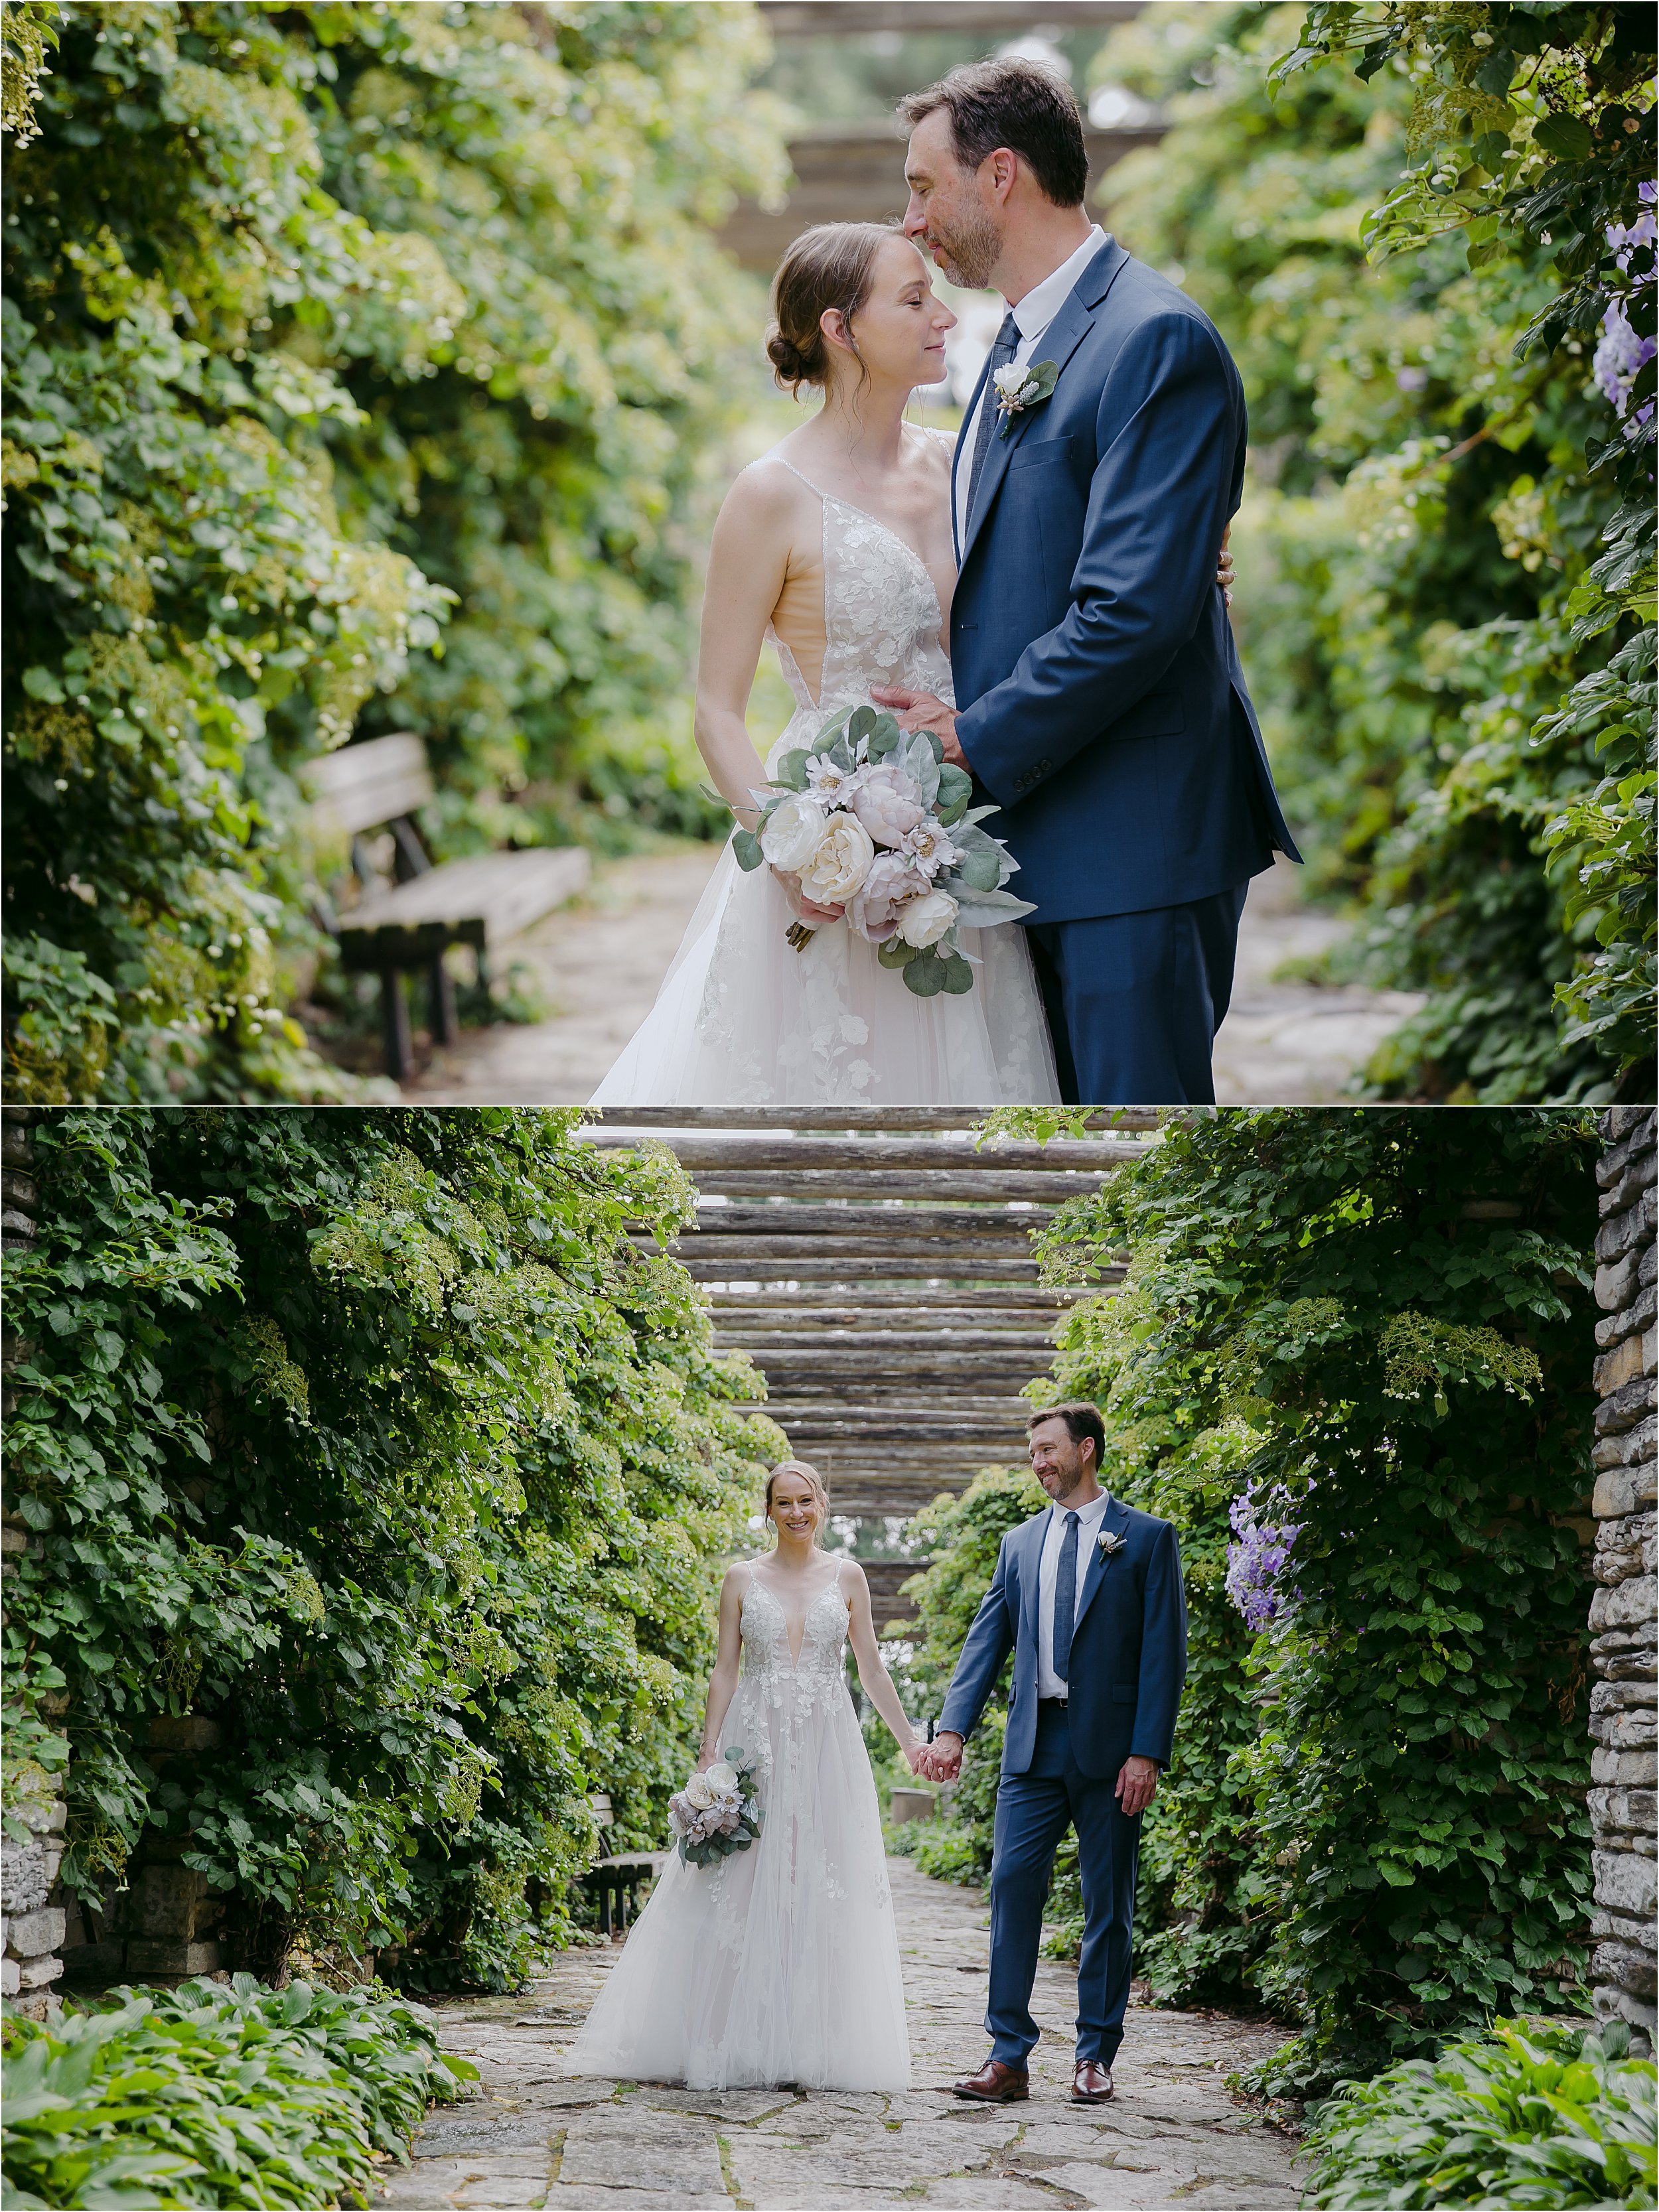 15-bride-groom-holding-hands-stone-walkway-gardens.JPG